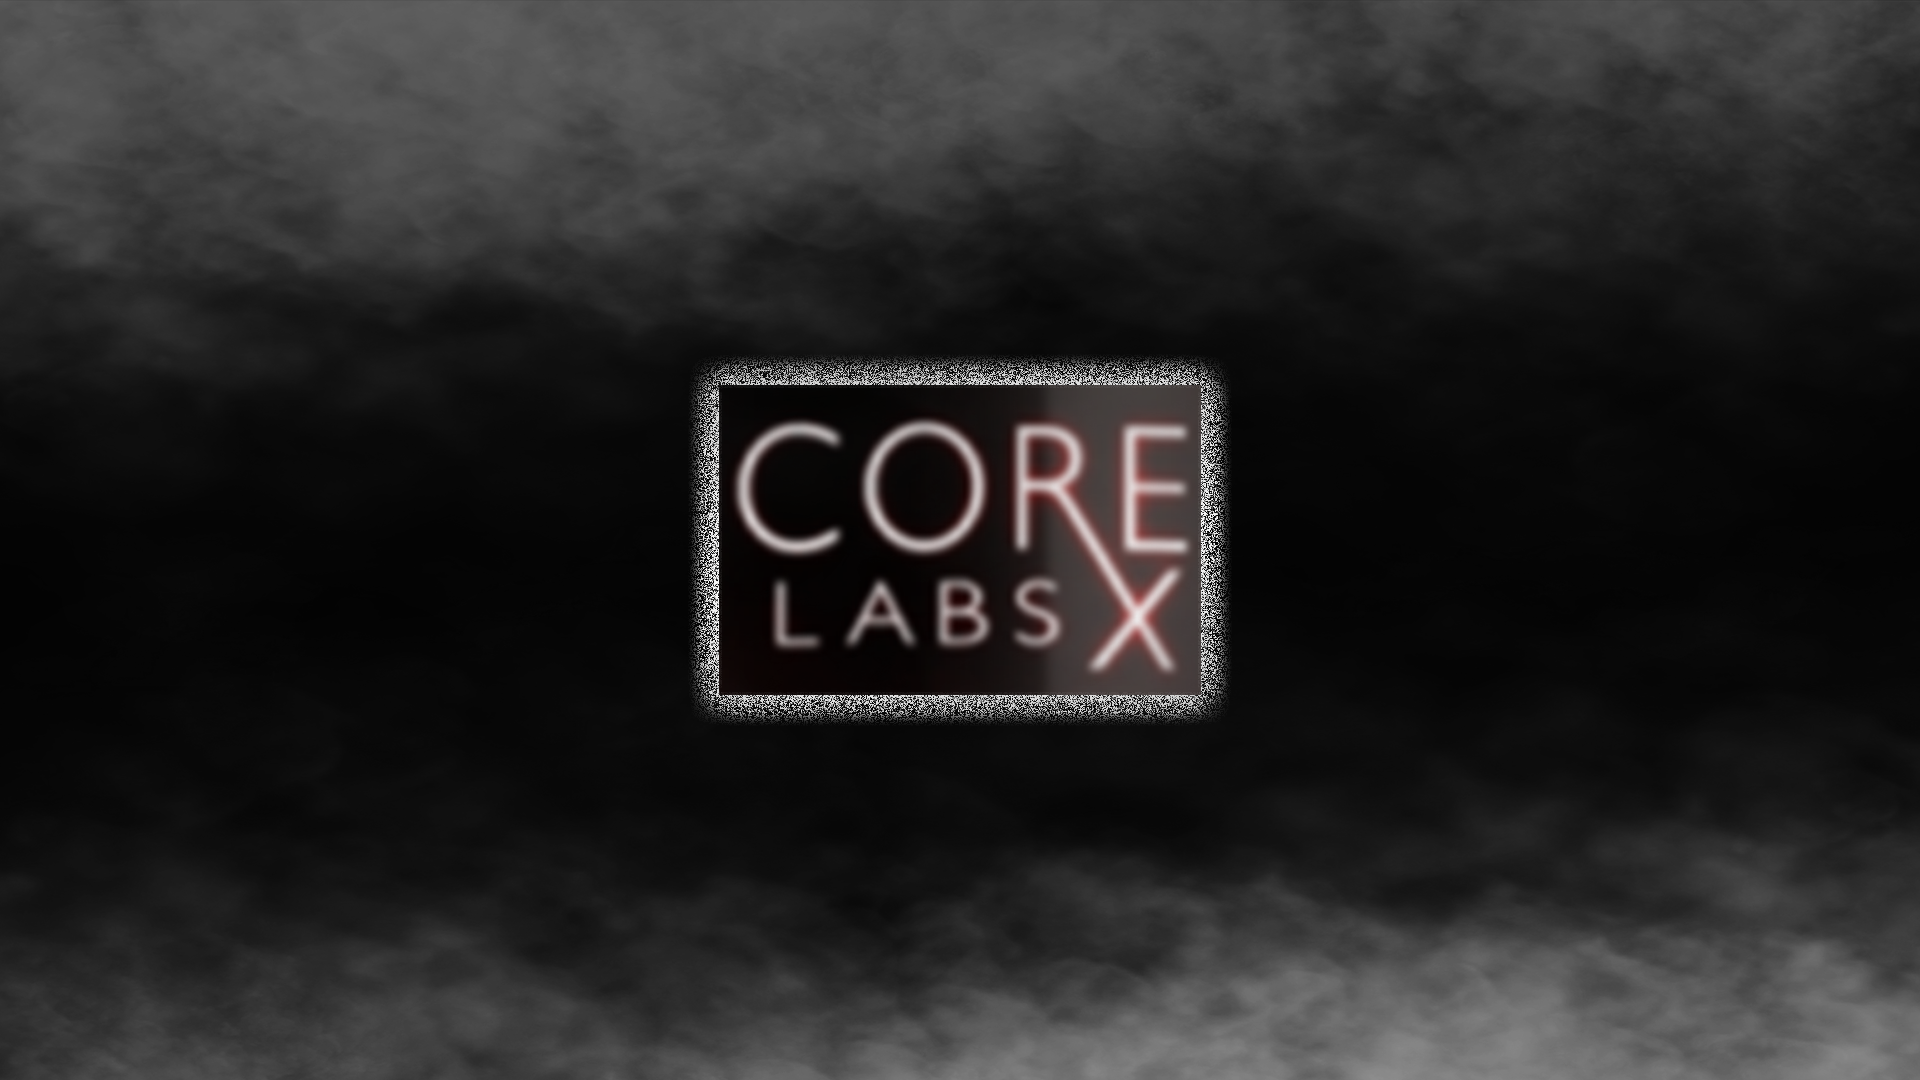 Core labs